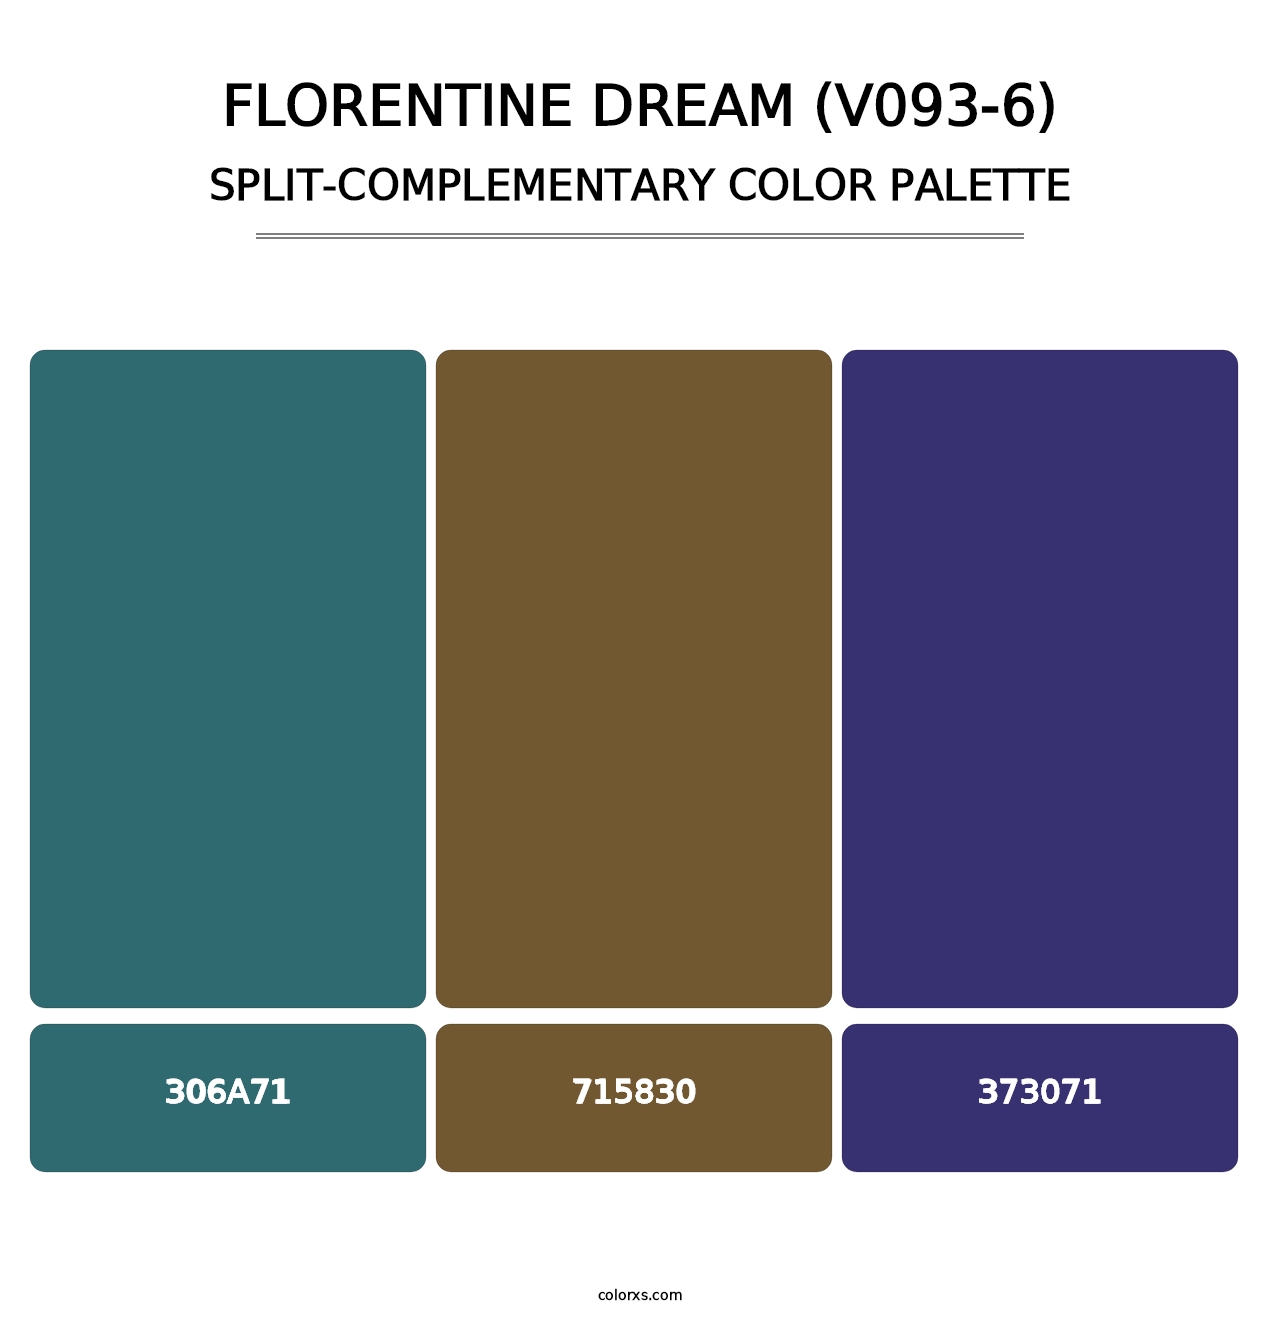 Florentine Dream (V093-6) - Split-Complementary Color Palette